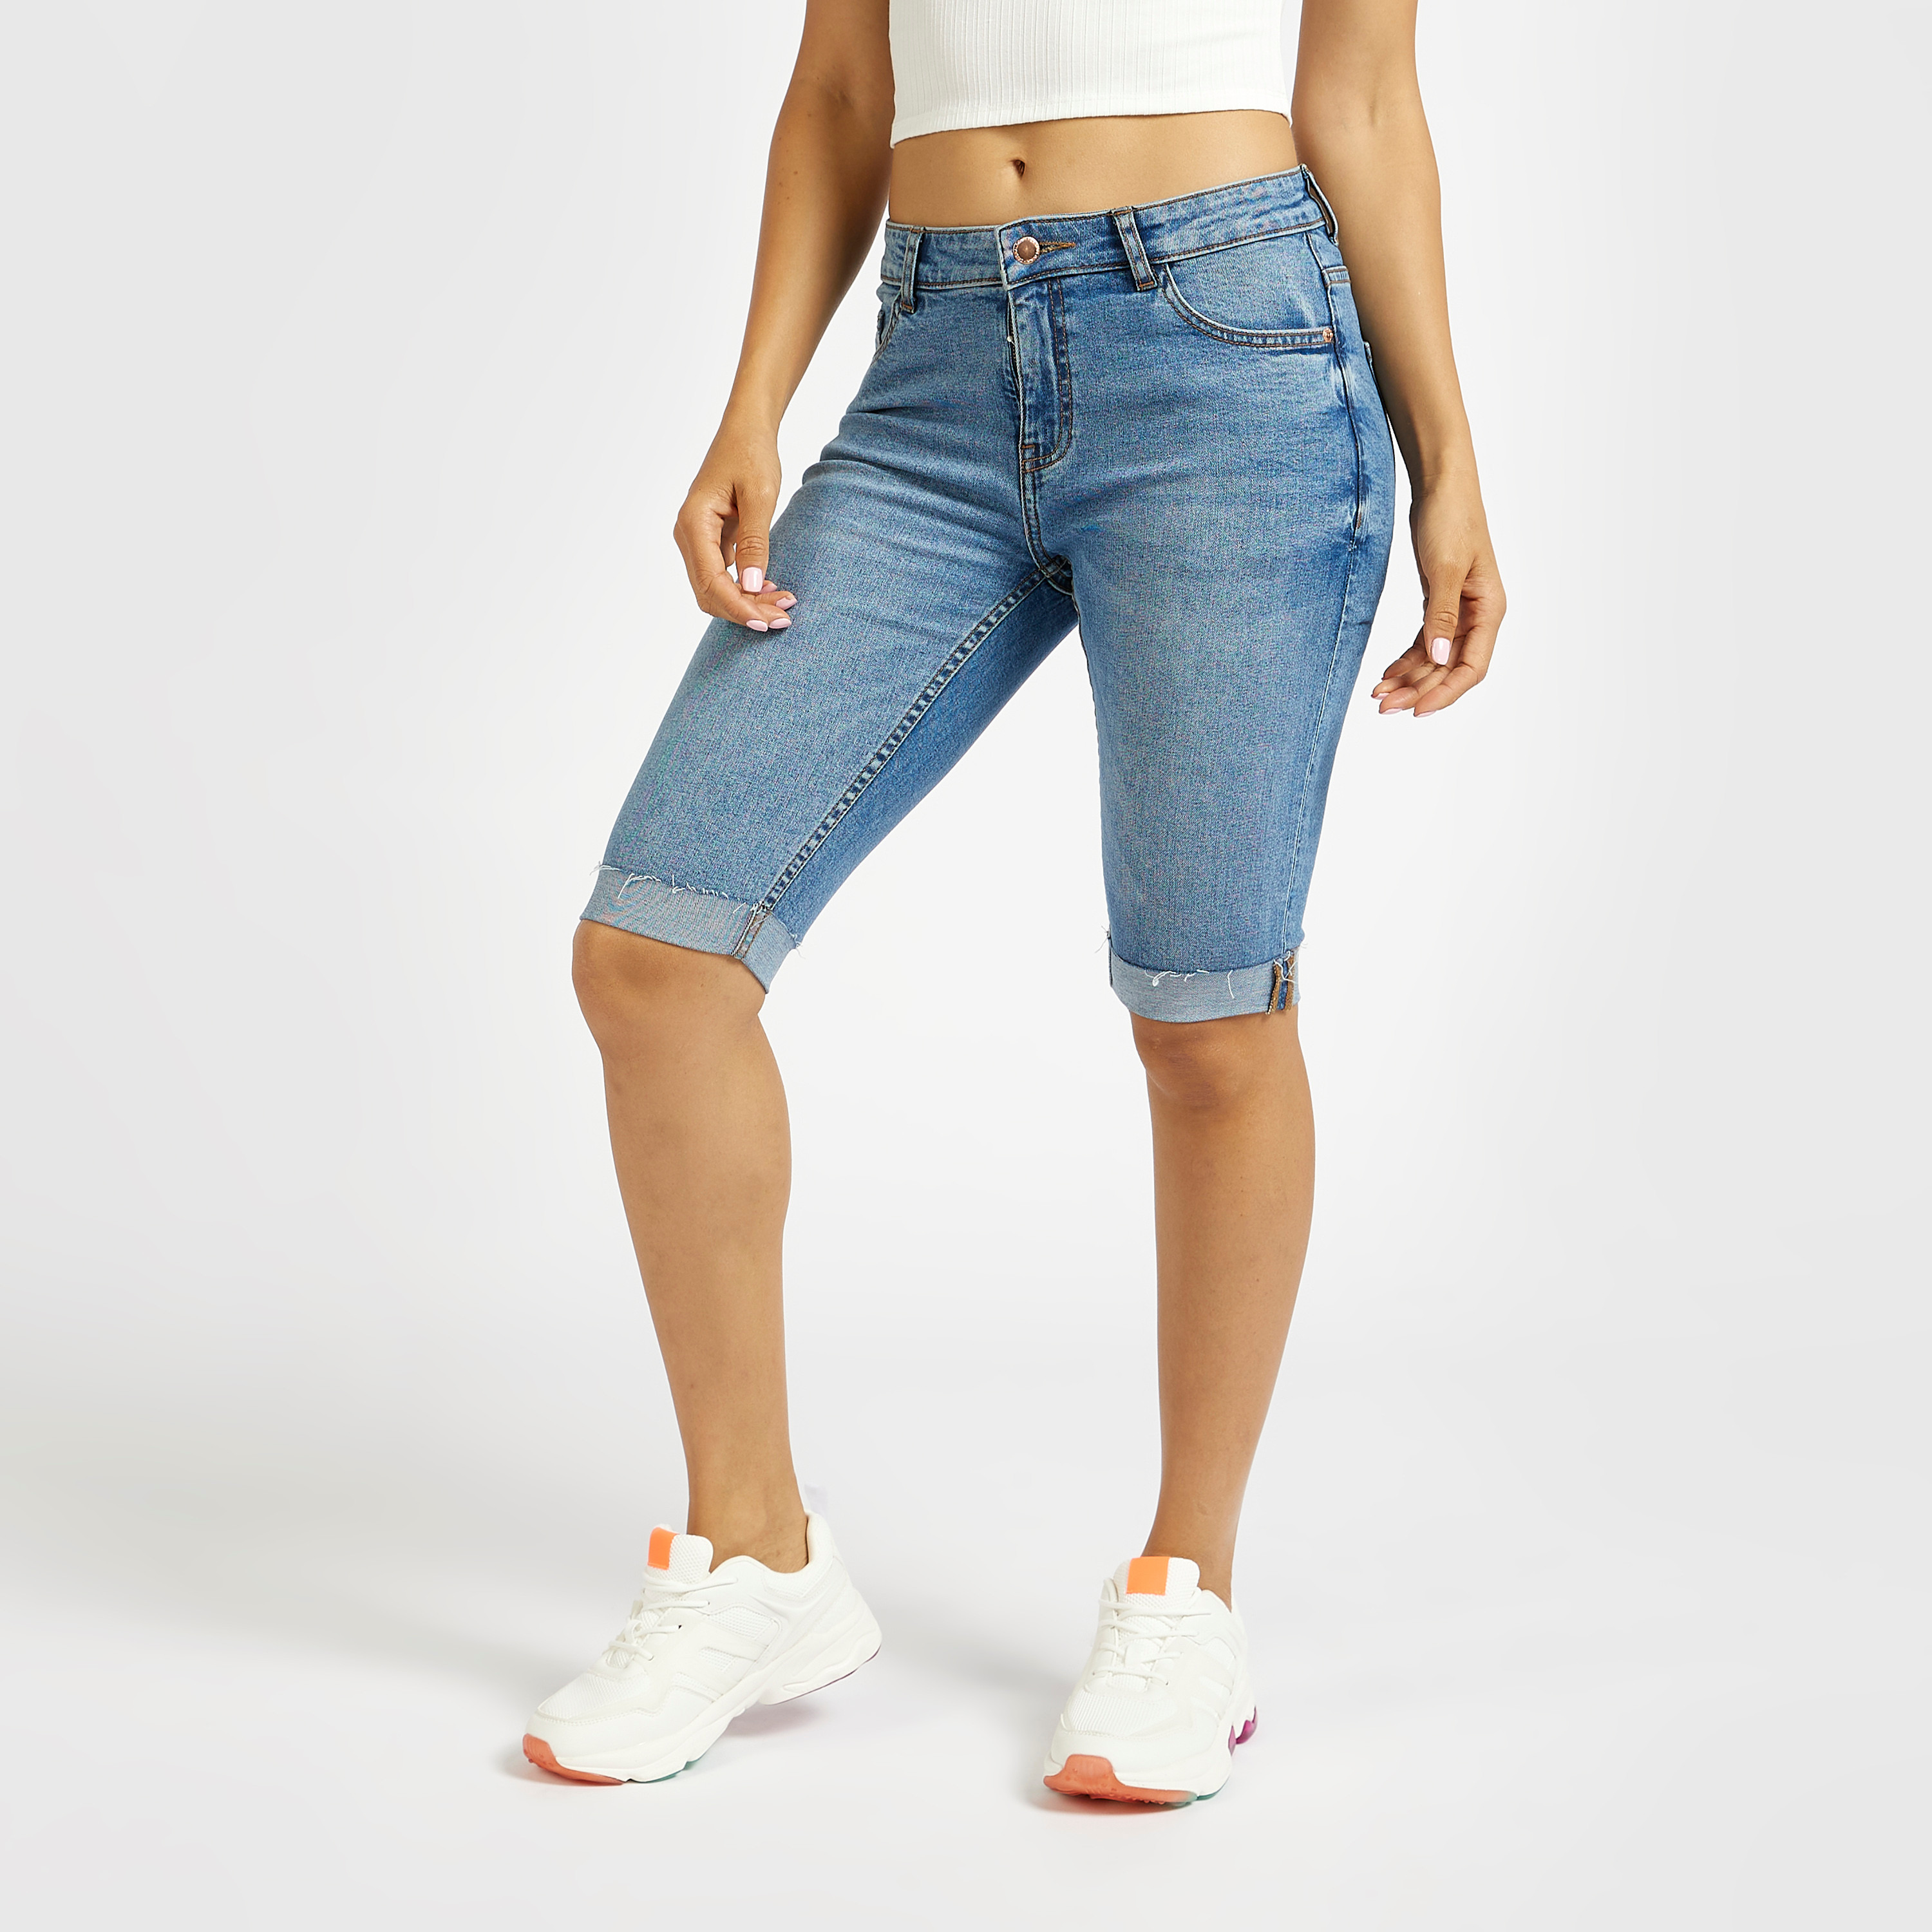 LONGYIDA Womens Jean Shorts High Waisted Denim Bermuda Shorts Ripped  Distressed Knee Length Stretch Denim Jean Short(Black,S) at Amazon Women's  Clothing store